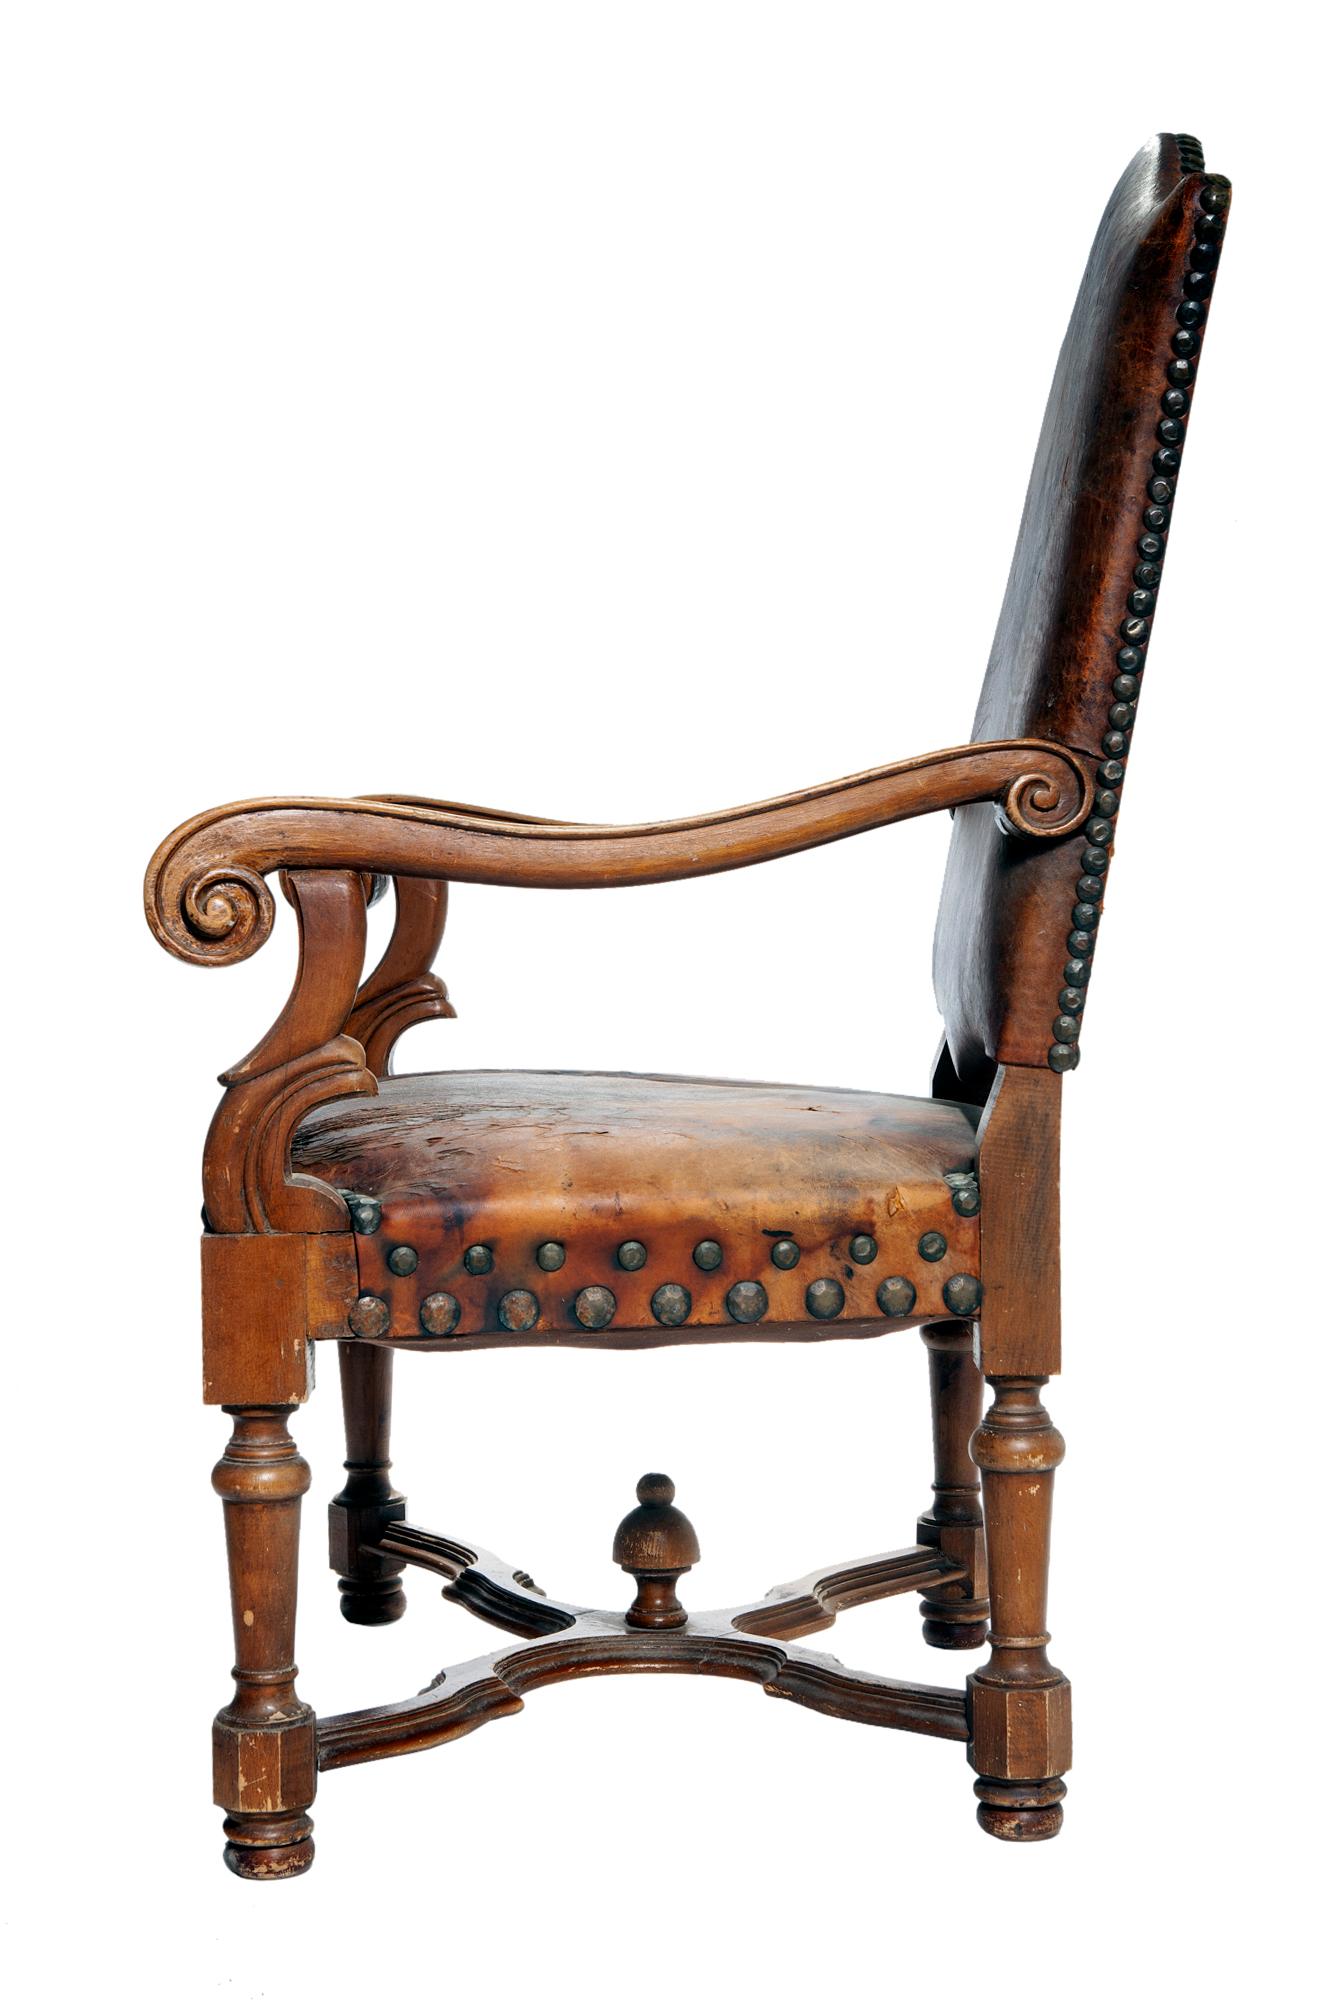 Baroque Revival Antique European Wood & Leather Chair W/ Nailhead Detail For Sale